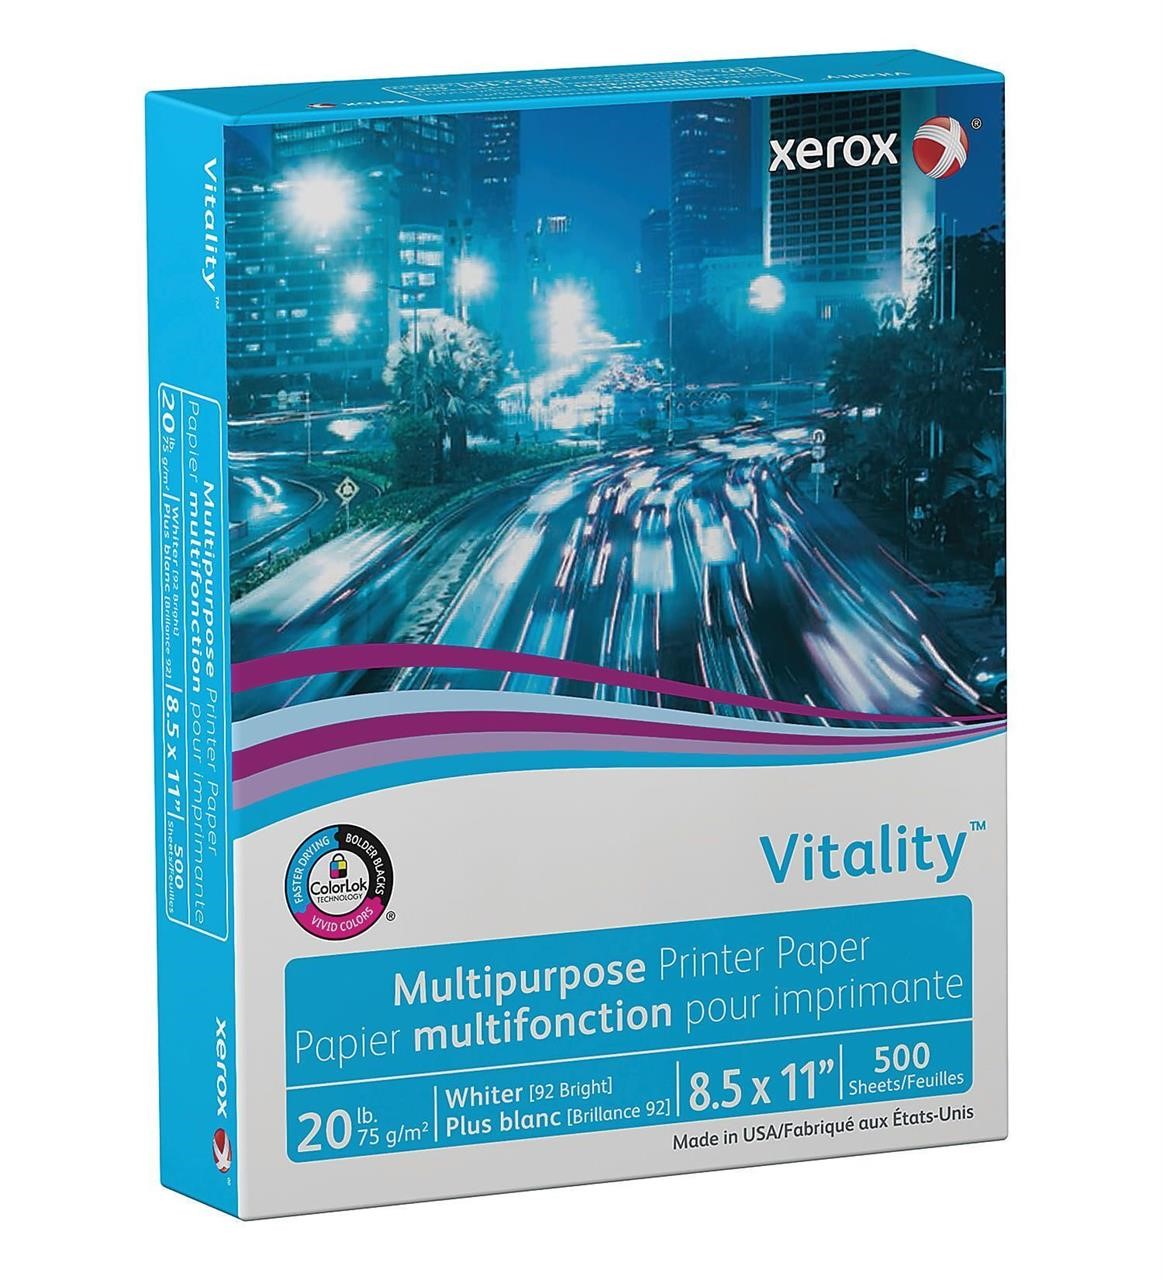 1 BOX-XEROX VITALITY PRINTER PAPER 500 SHEETS REAM